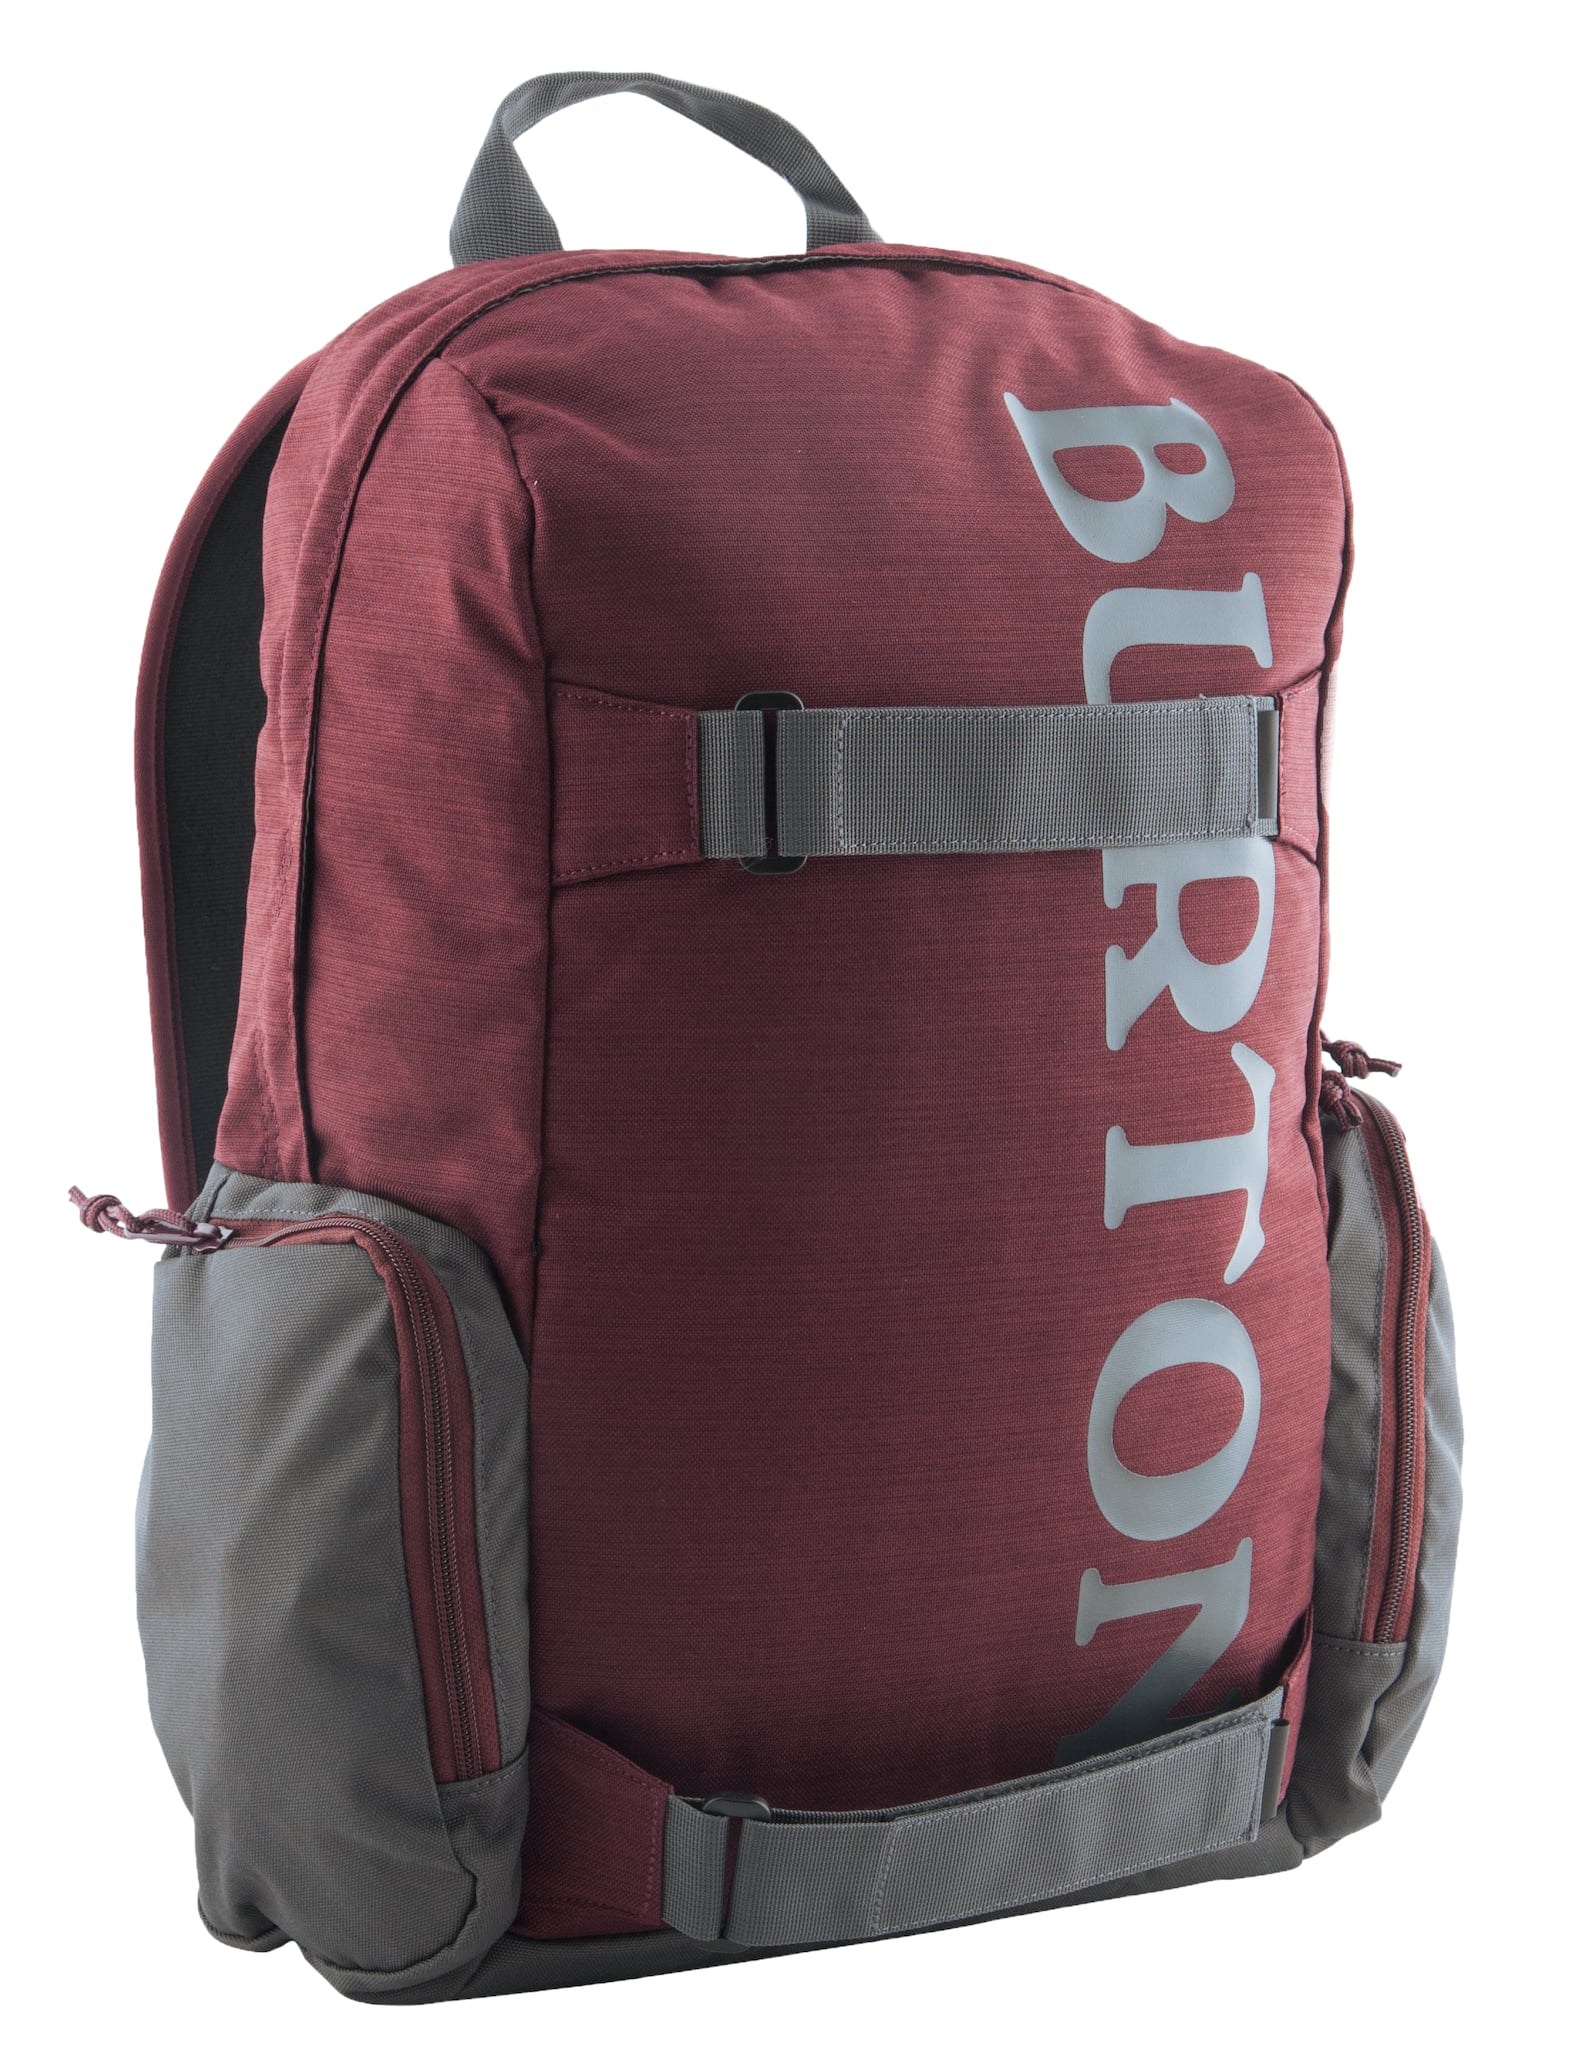 Burton Emphasis 26L Backpack | Burton.com Spring 2020 IT